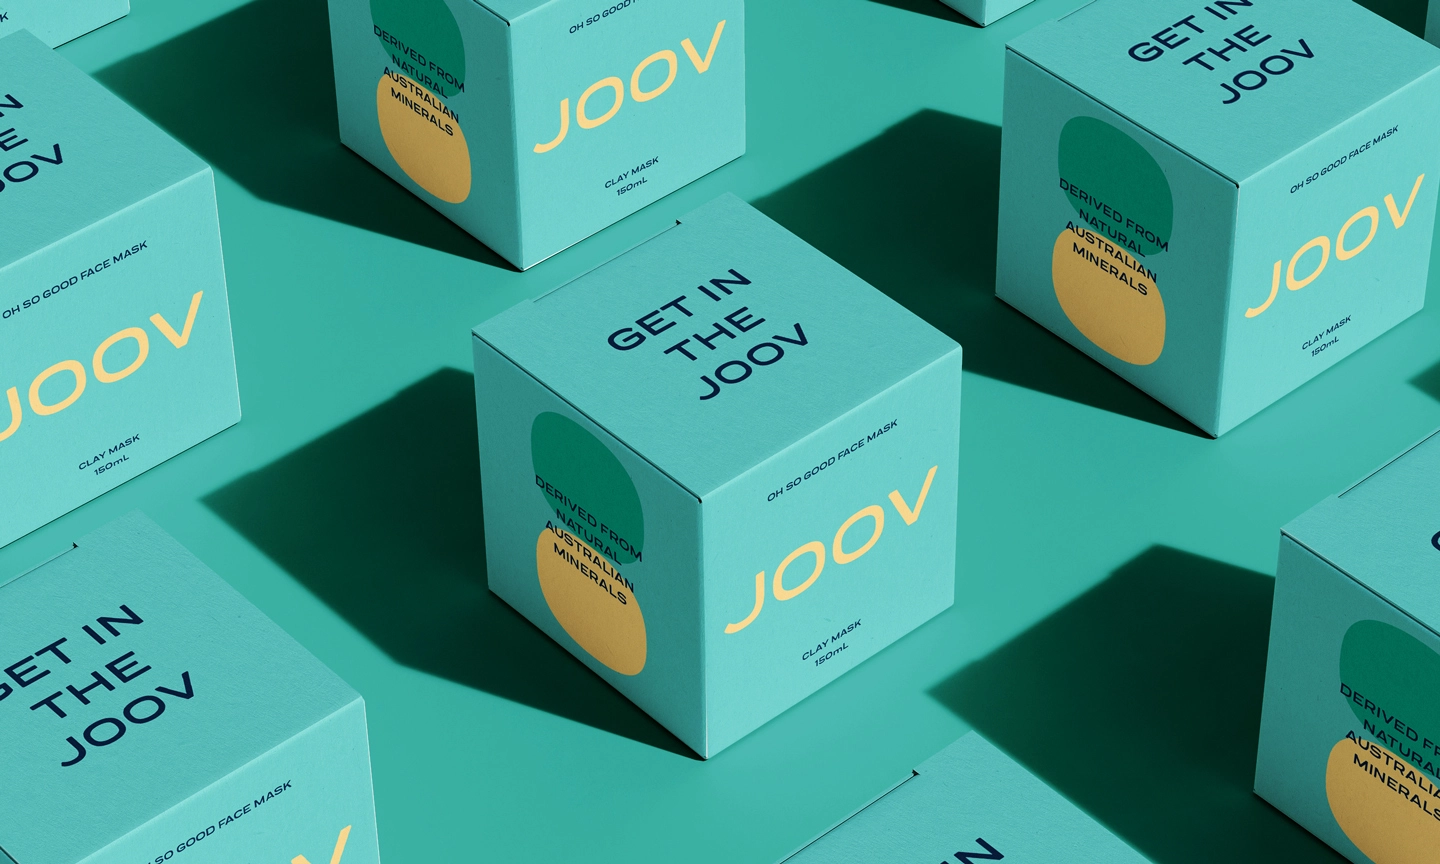 JOOV skincare product packaging design by Kaliber Studio